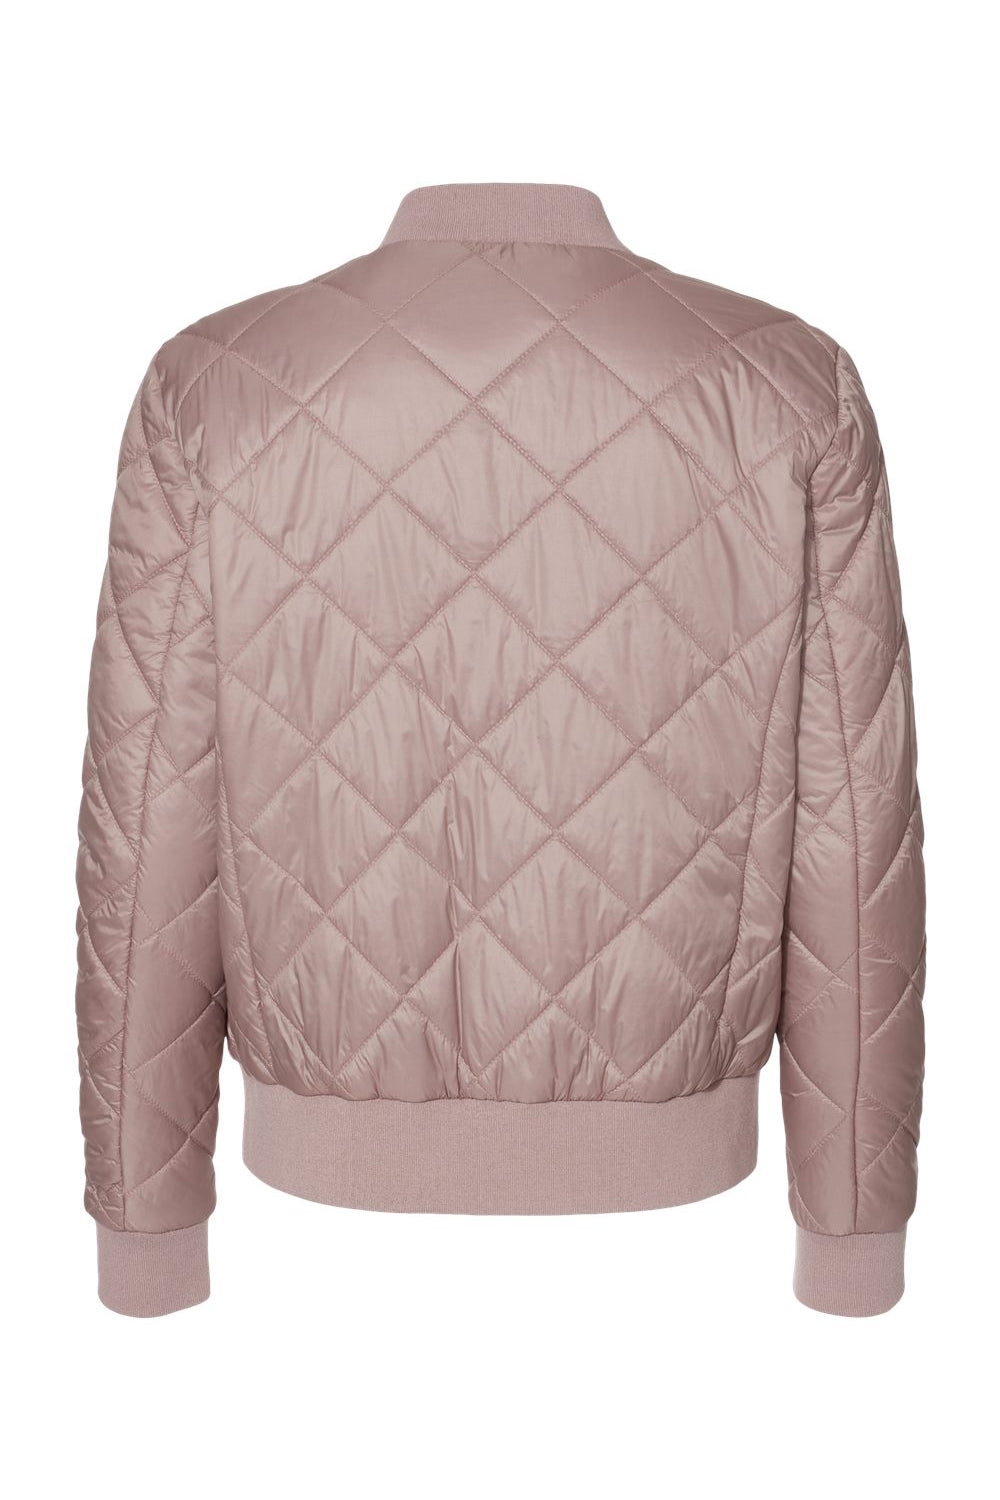 Weatherproof W21752 Womens HeatLast Quilted Packable Full Zip Bomber Jacket Blush Pink Flat Back